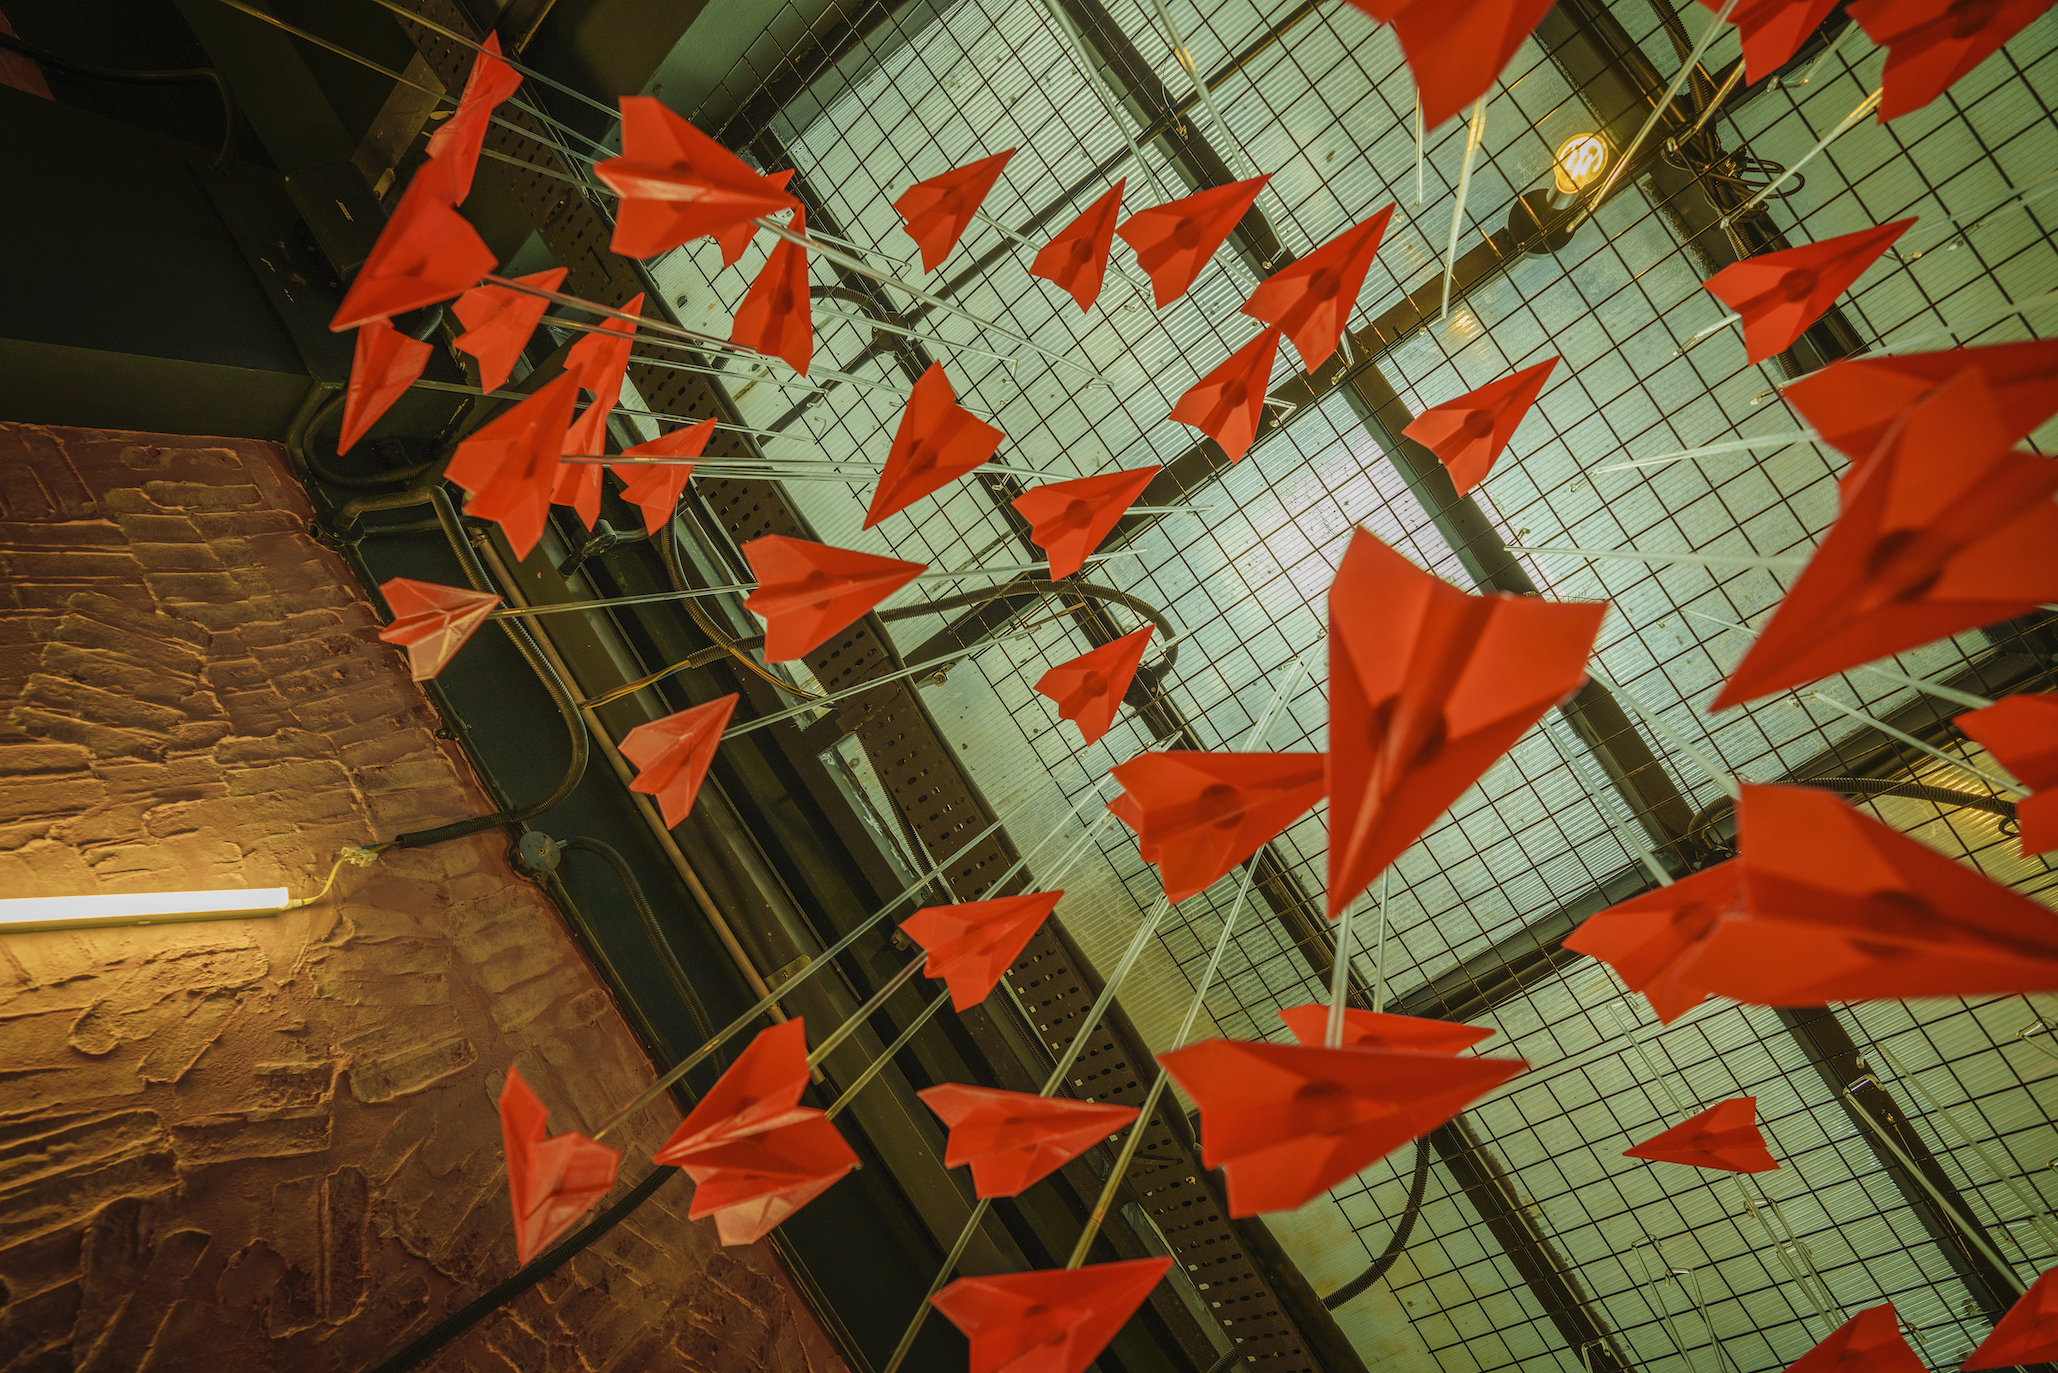 Flocks of red paper planes bejewelling the ceilings